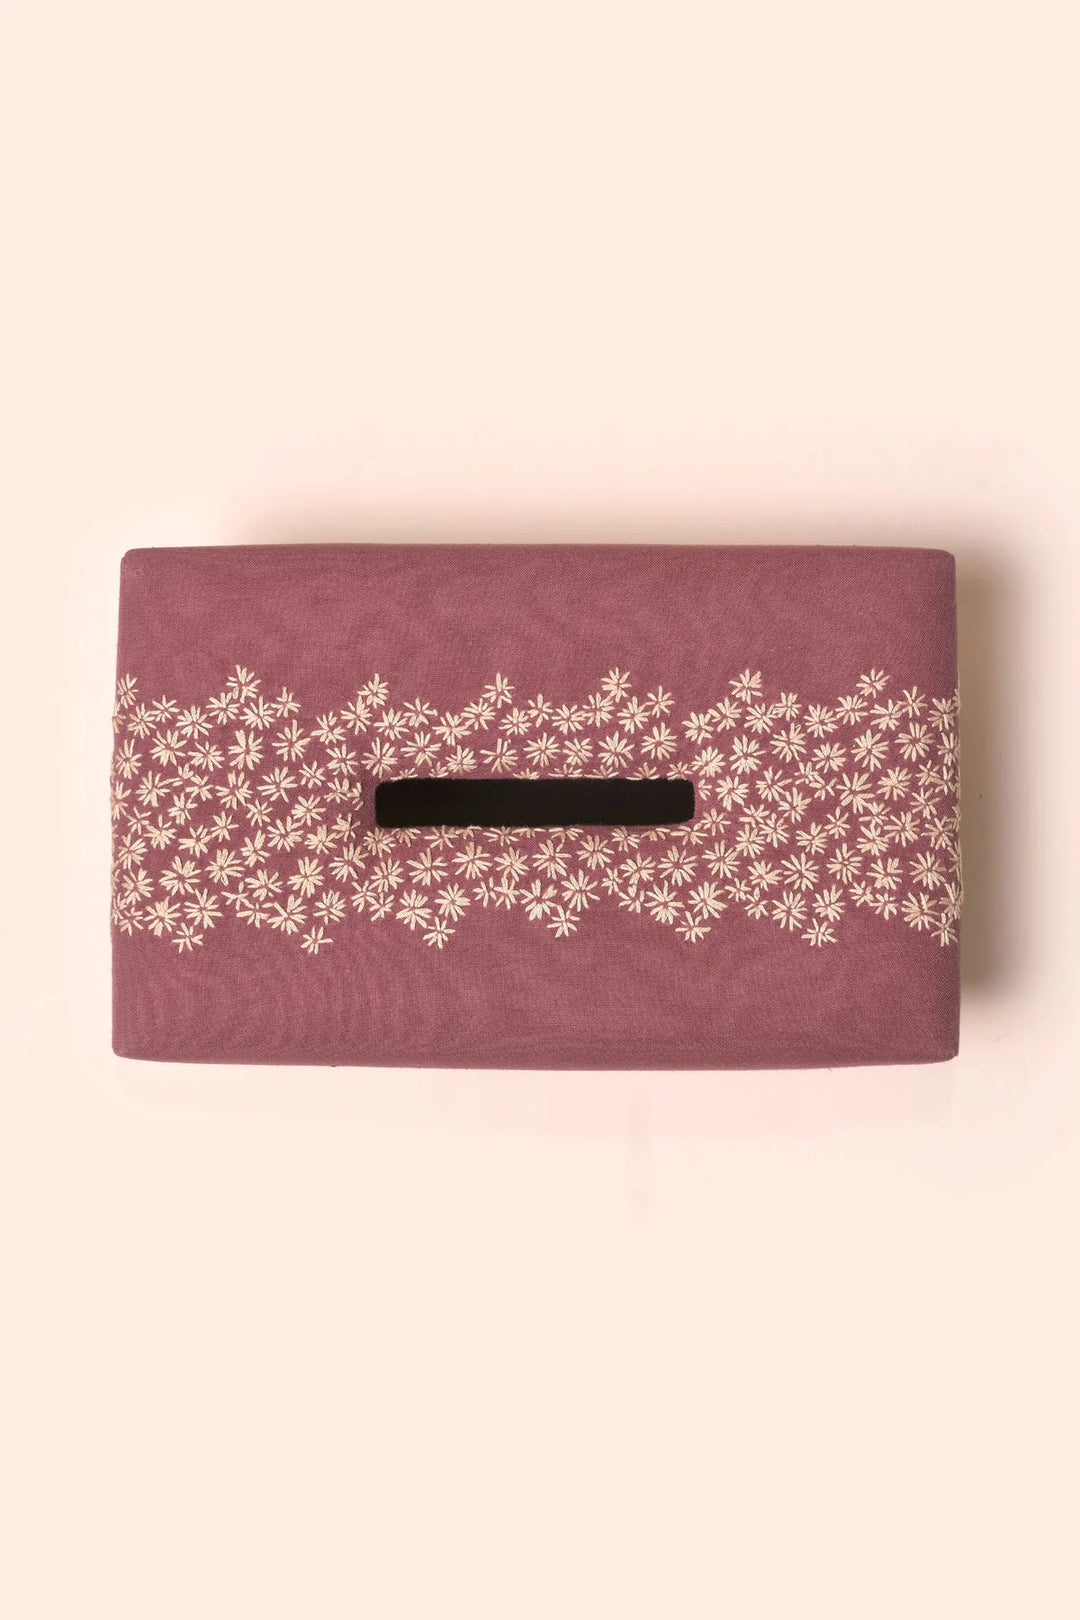 Handwoven Floral Tissue Box | Scarlet Handwoven Tissue Box - Maroon